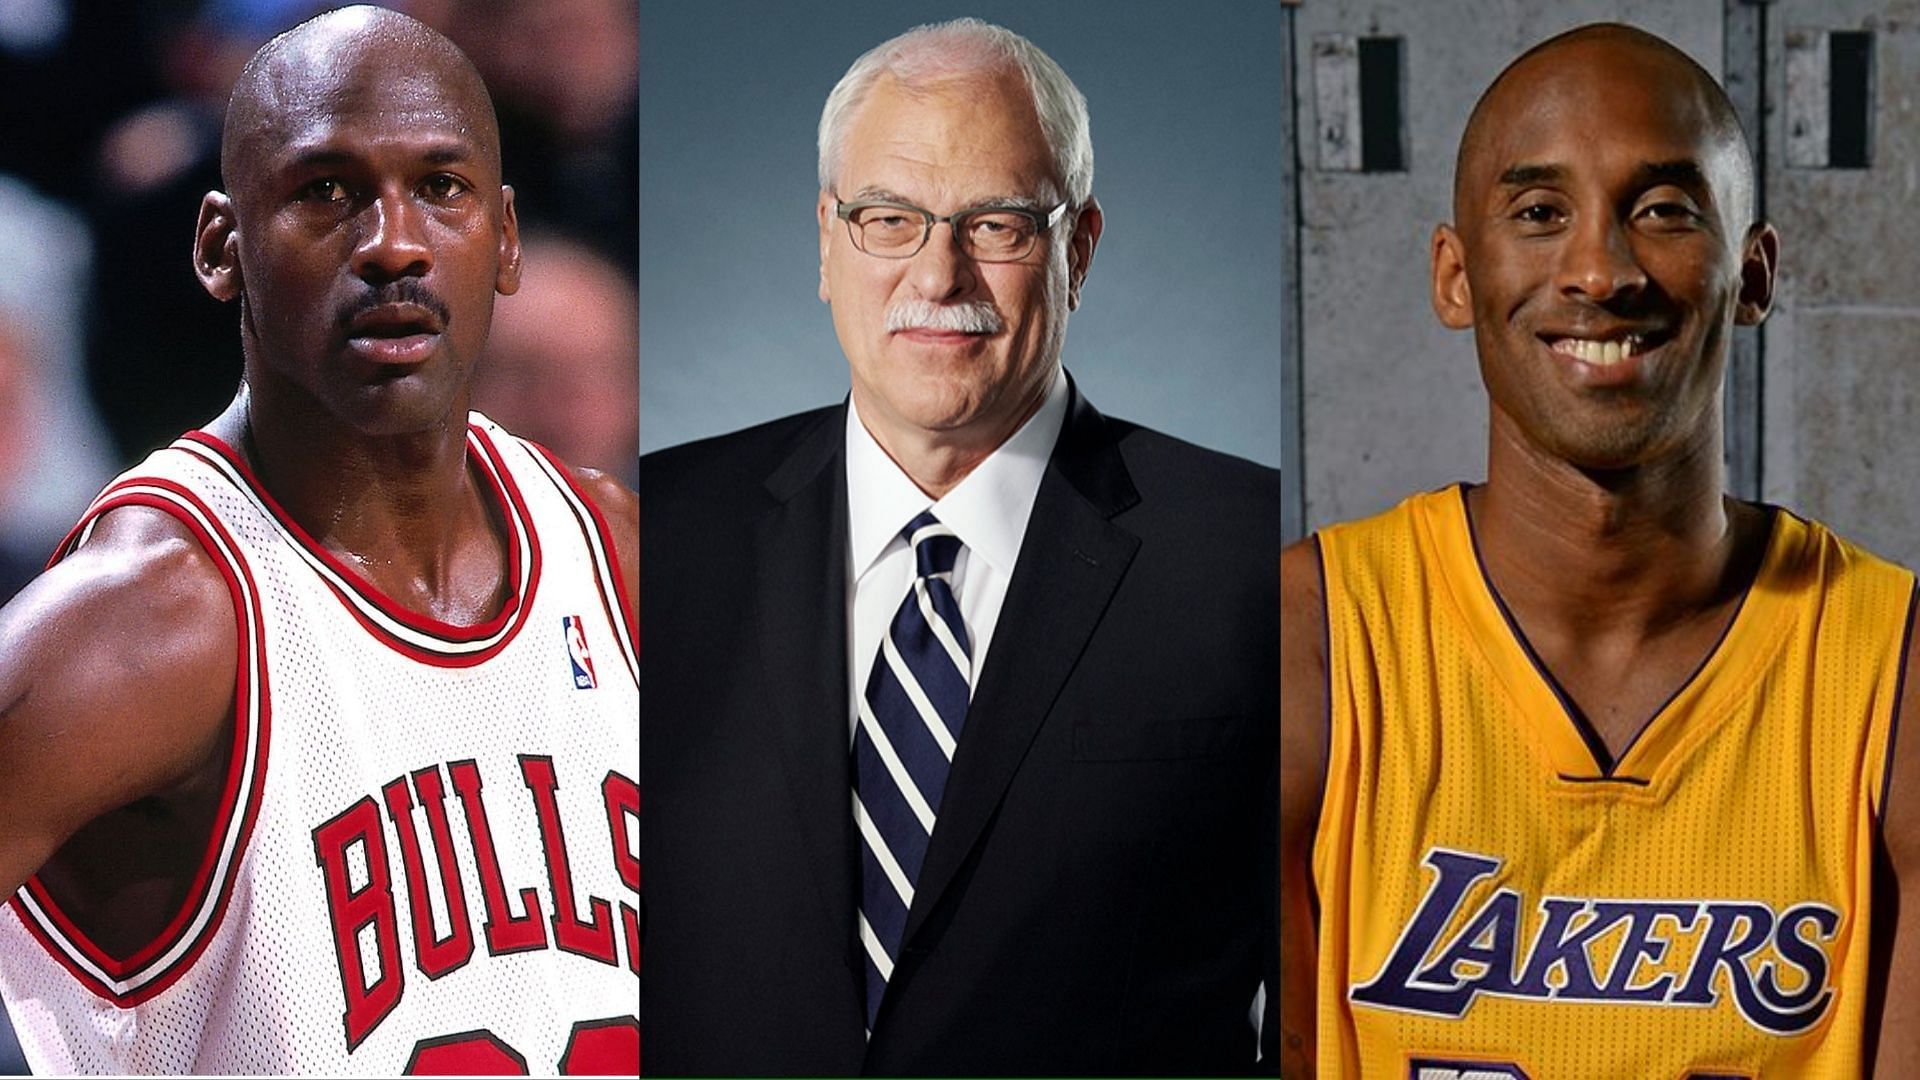 Michael Jordan, Phil Jackson, and Kobe Bryant